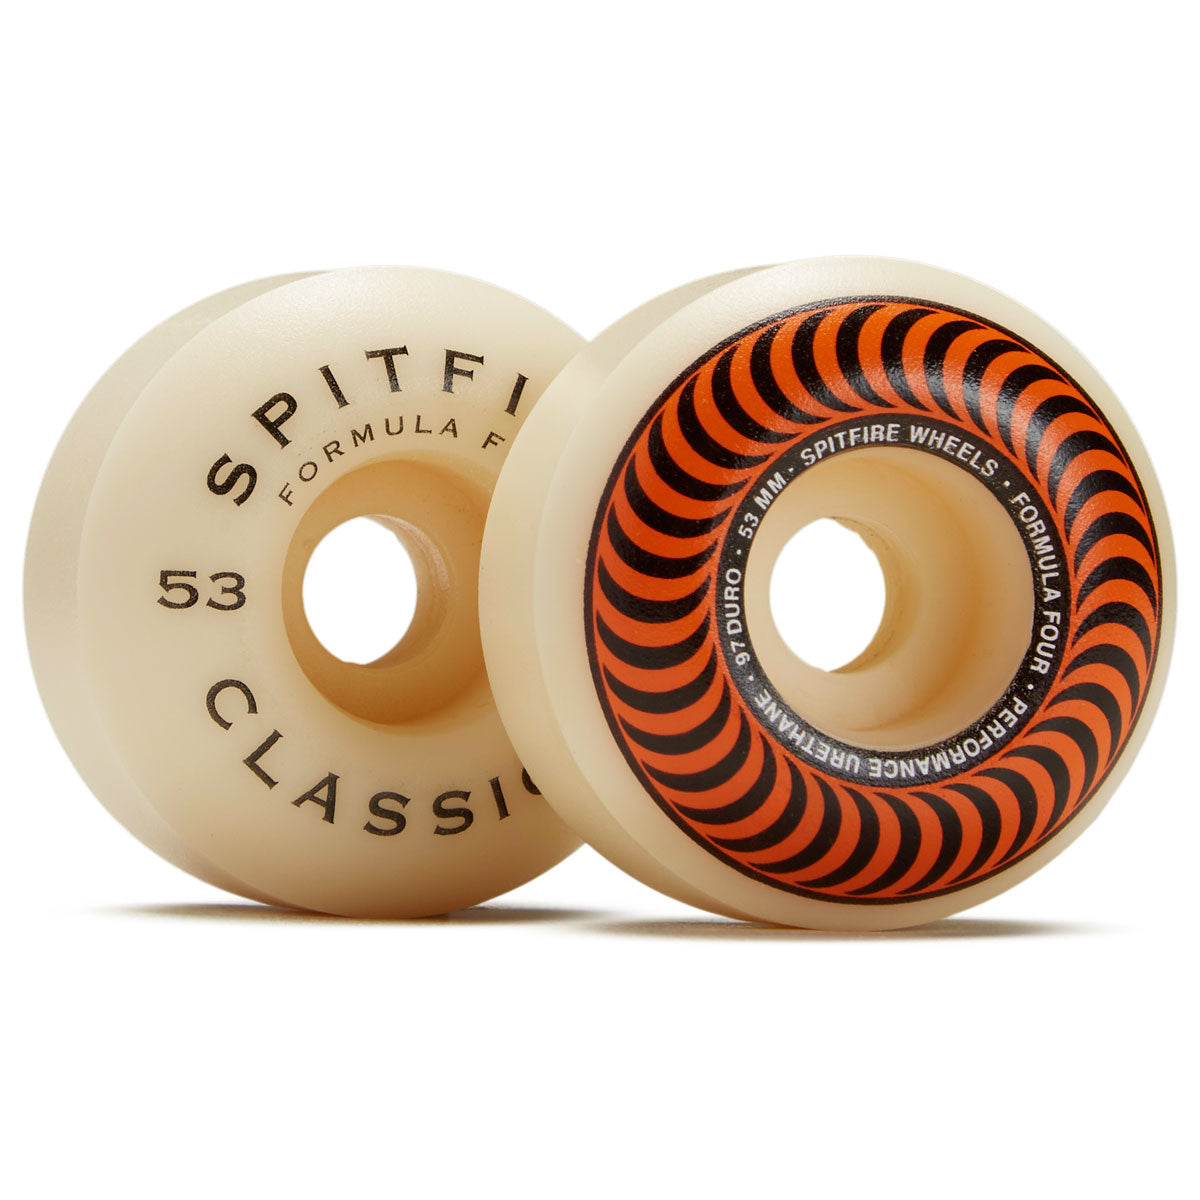 Spitfire F4 97d Classics Skateboard Wheels - 53mm image 1